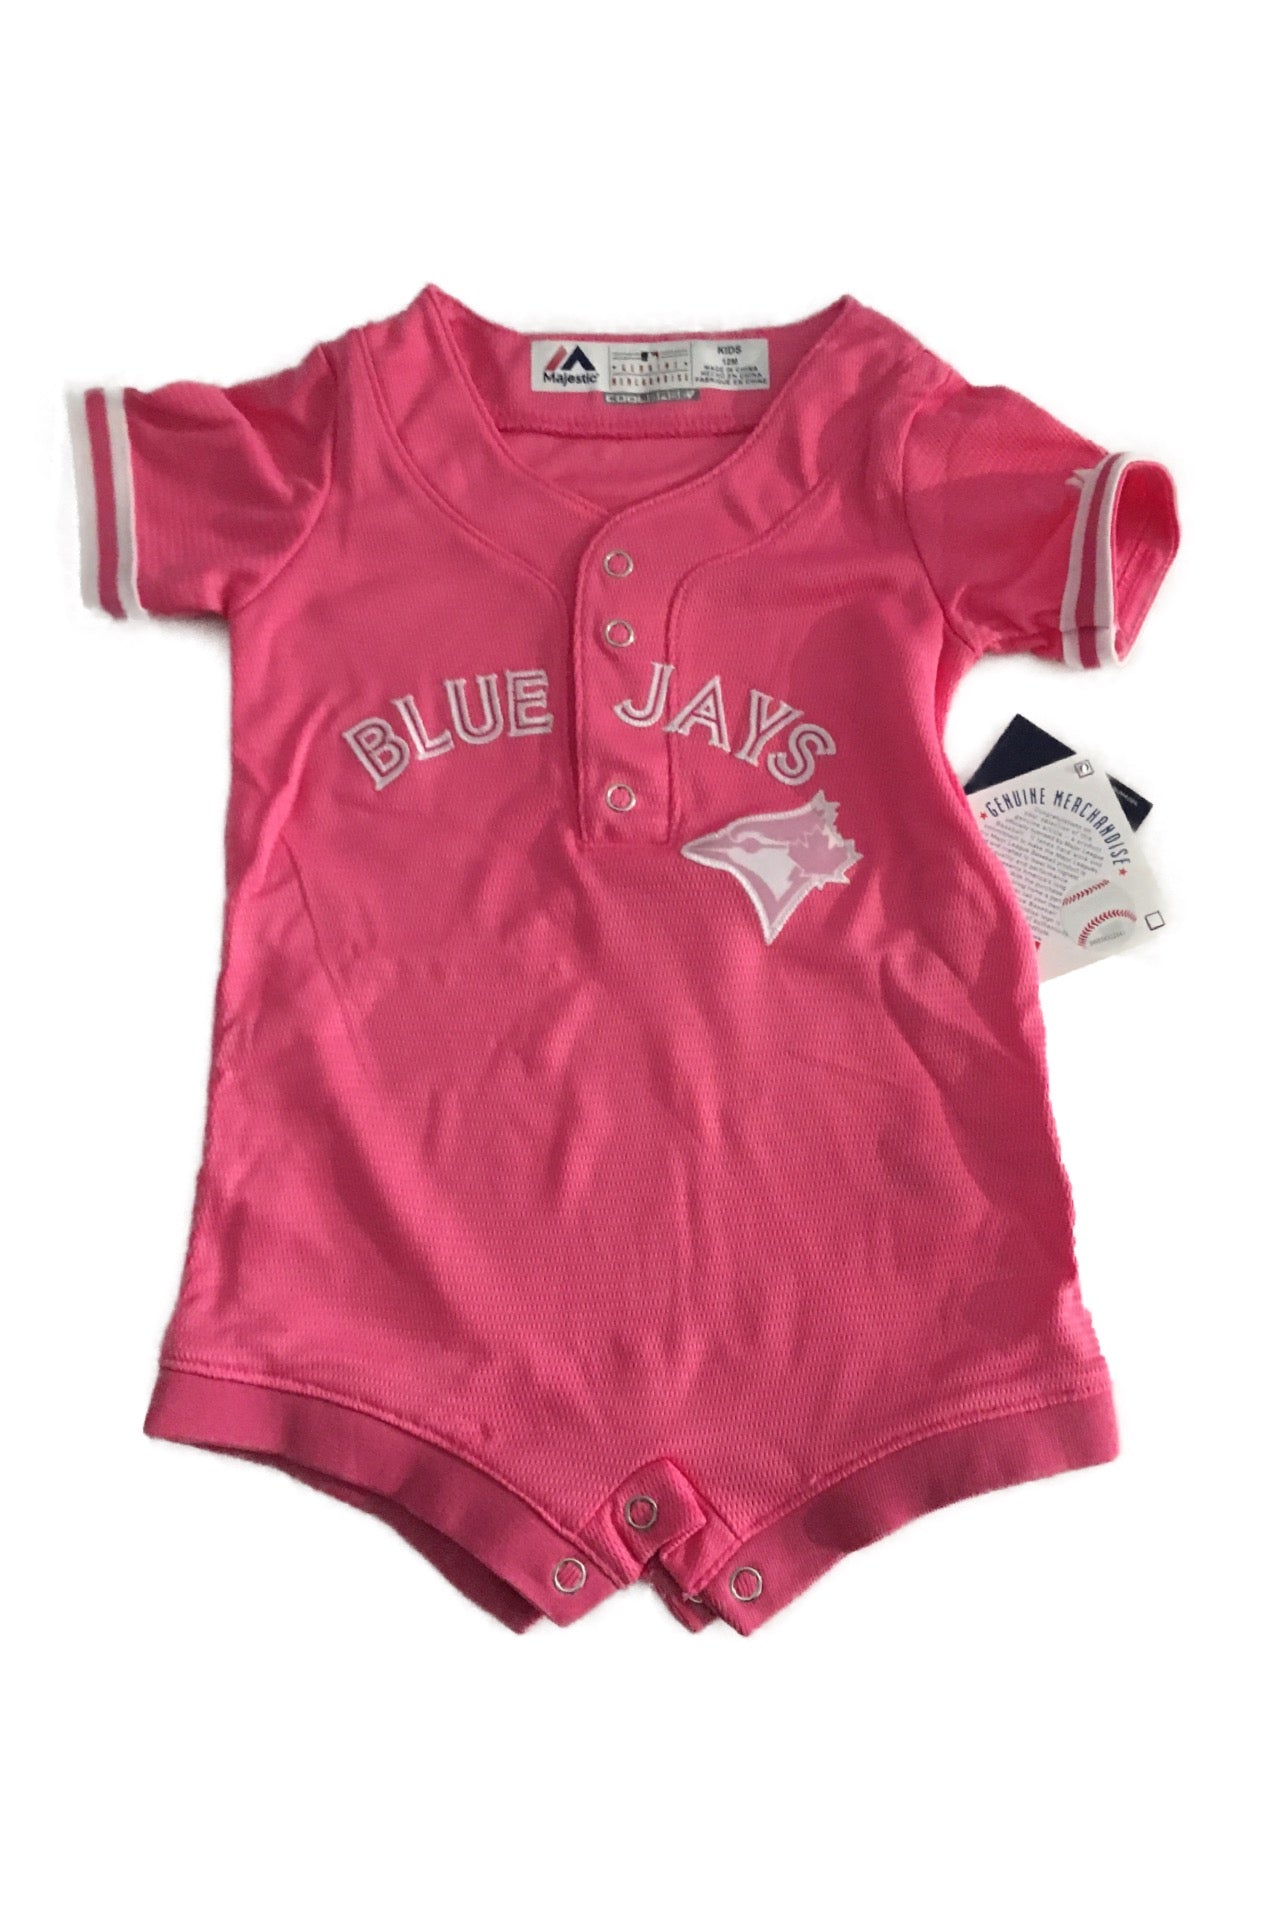 Custom Blue Jay Baseball Baby Bodysuit With Name & Number I 